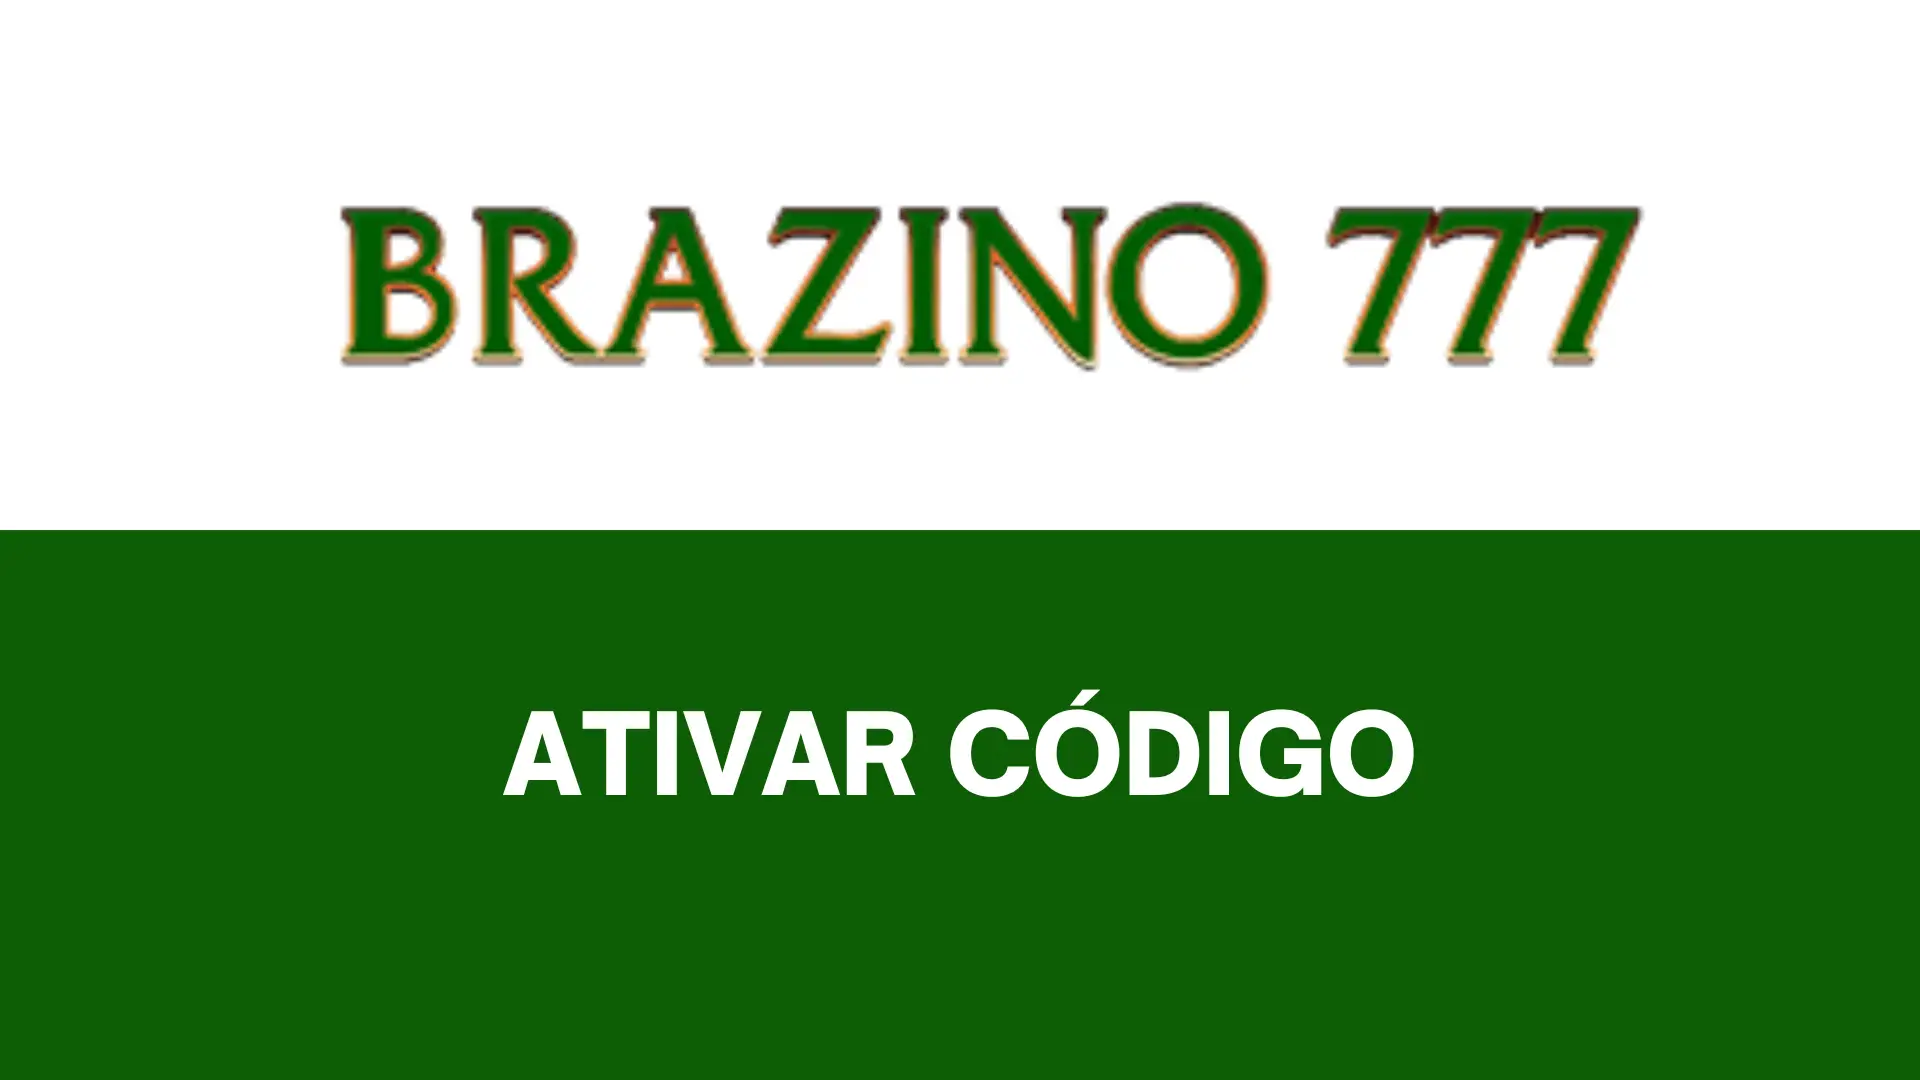 Brazino777 codigos promocionales